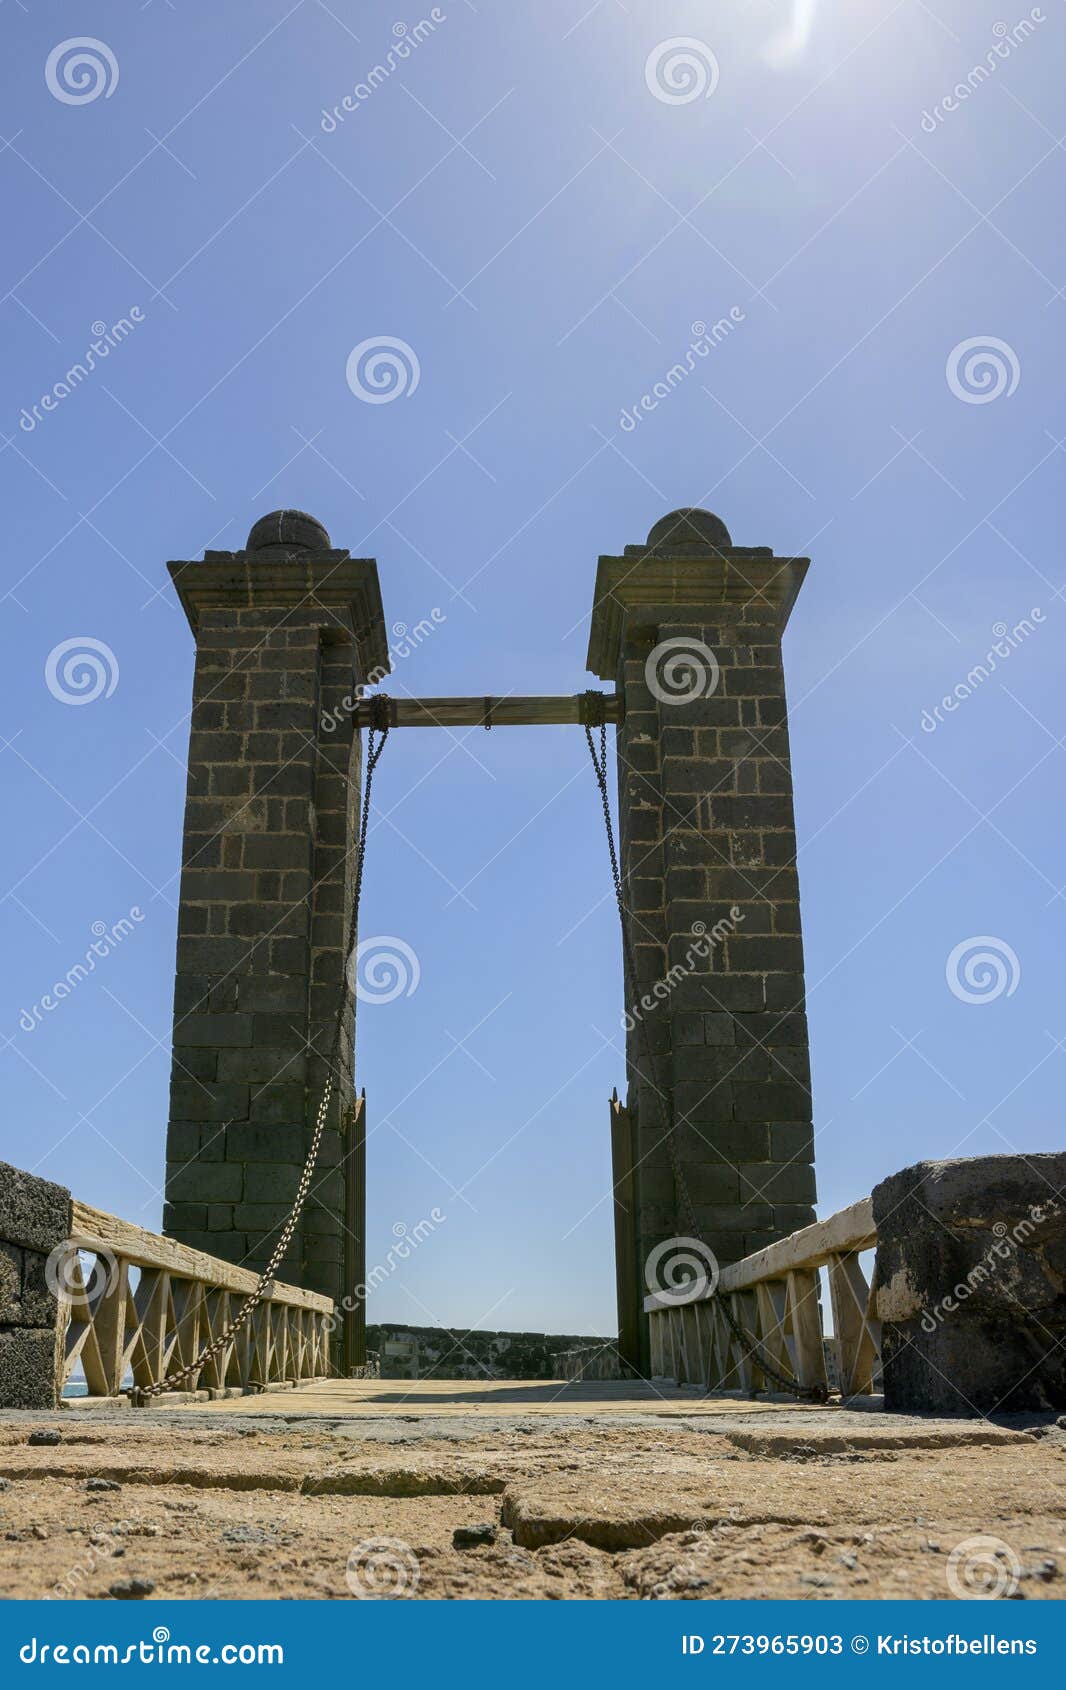 vertical shot of puente de las bolas, a bridge that leads to san gabriel castle in arrecife